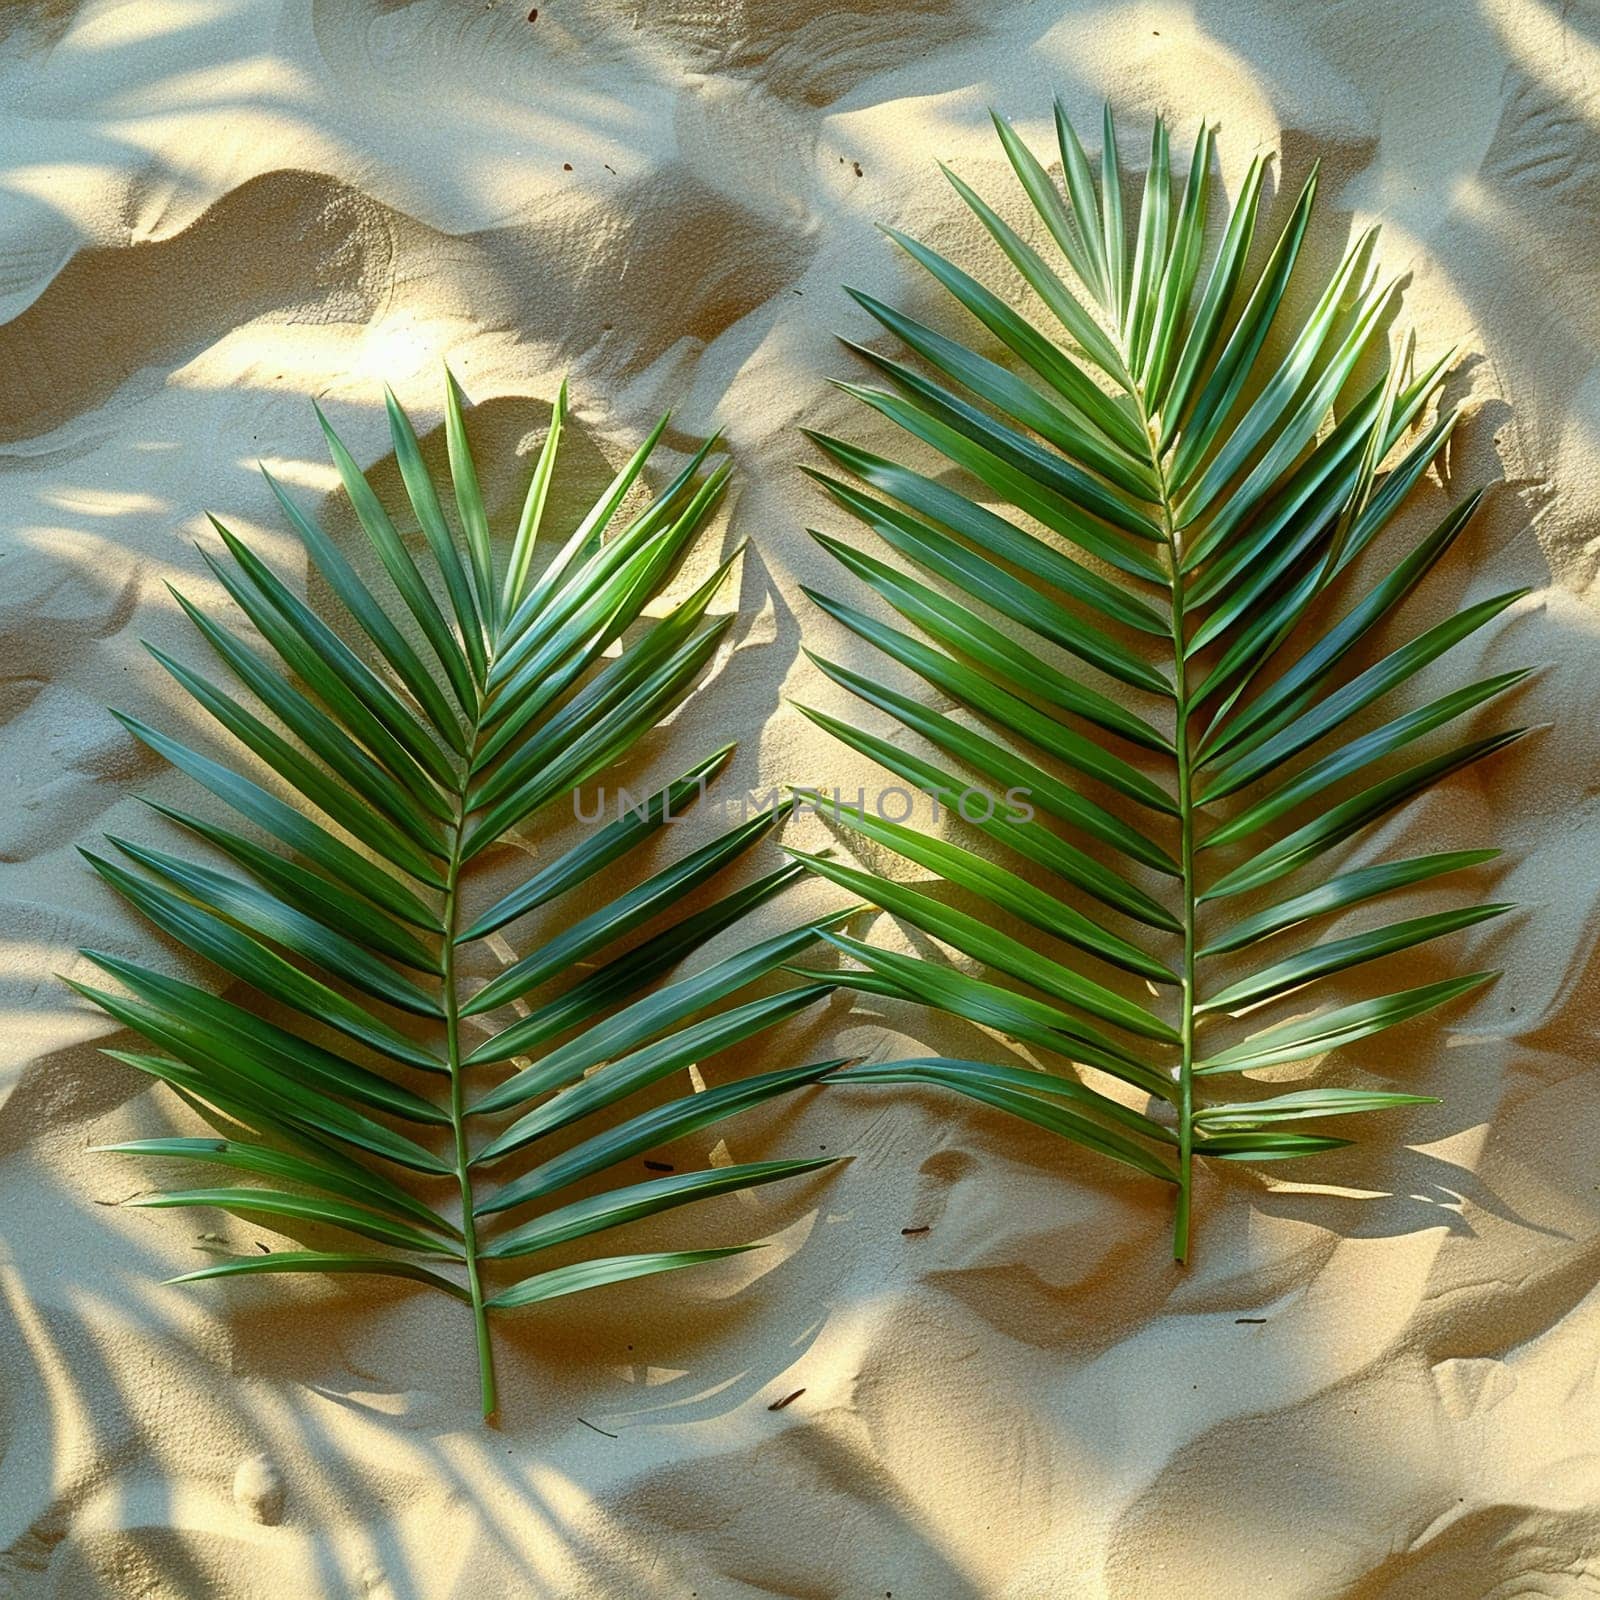 Artful arrangement of palm fronds on sandy beach, representing Palm Sunday.